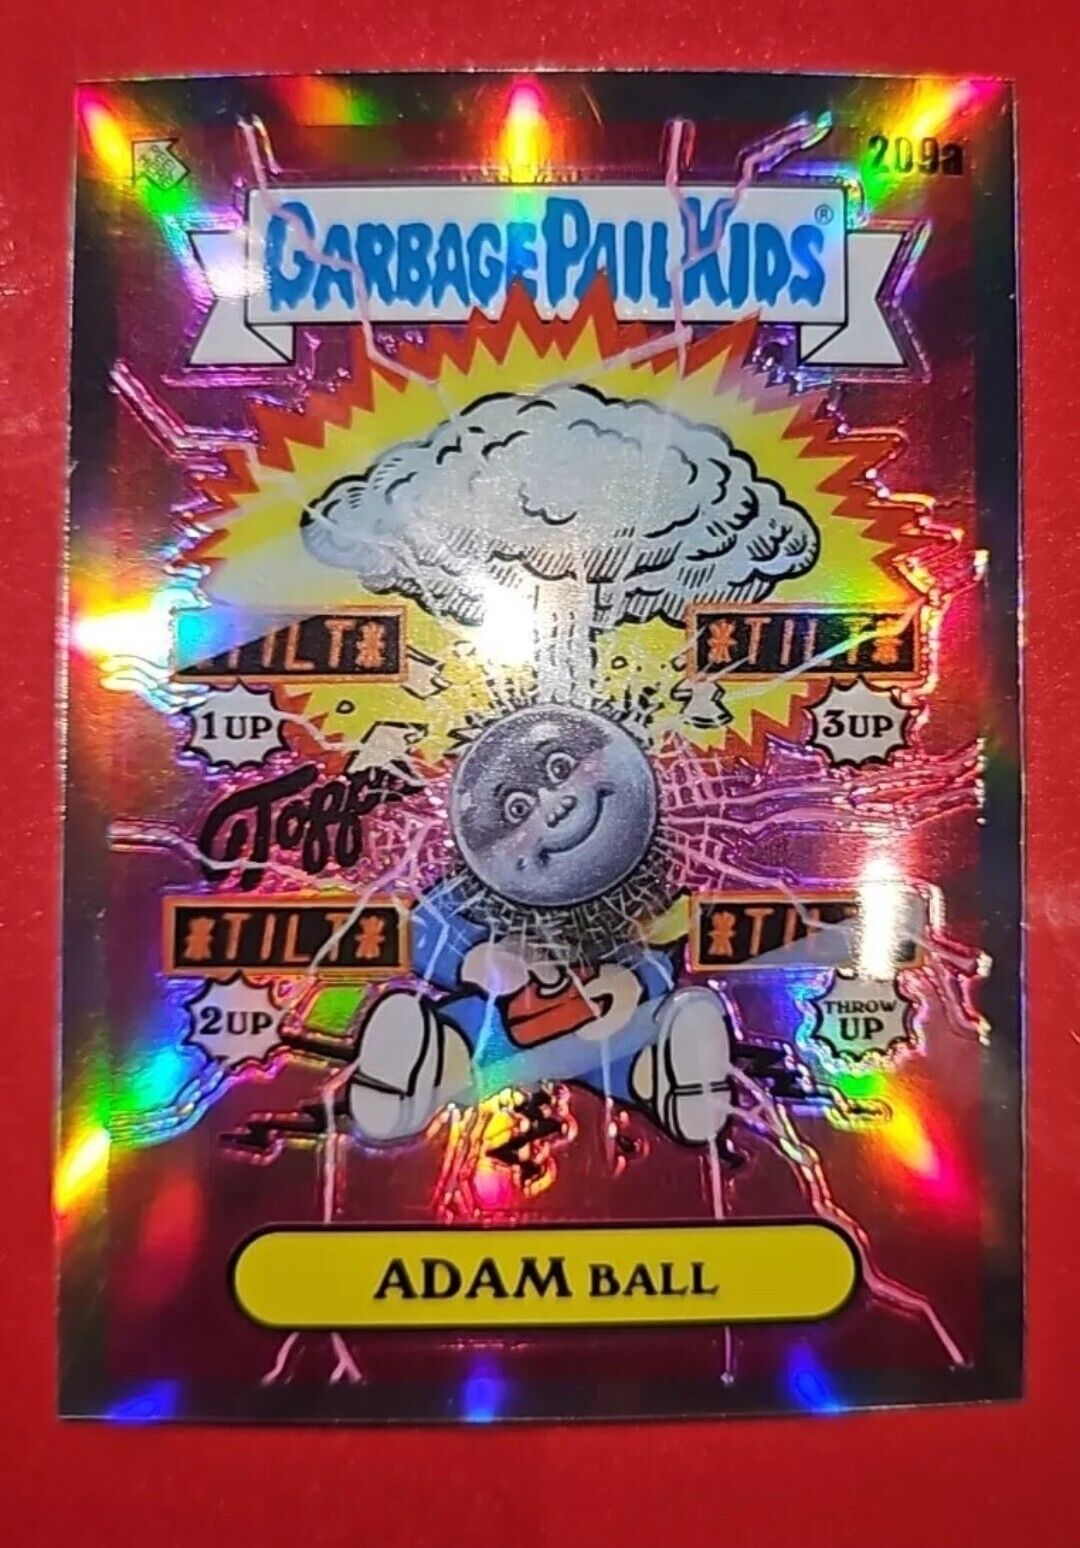 2022 Garbage Pail Kids Basic Chrome Refractor Card 209a Adam Ball